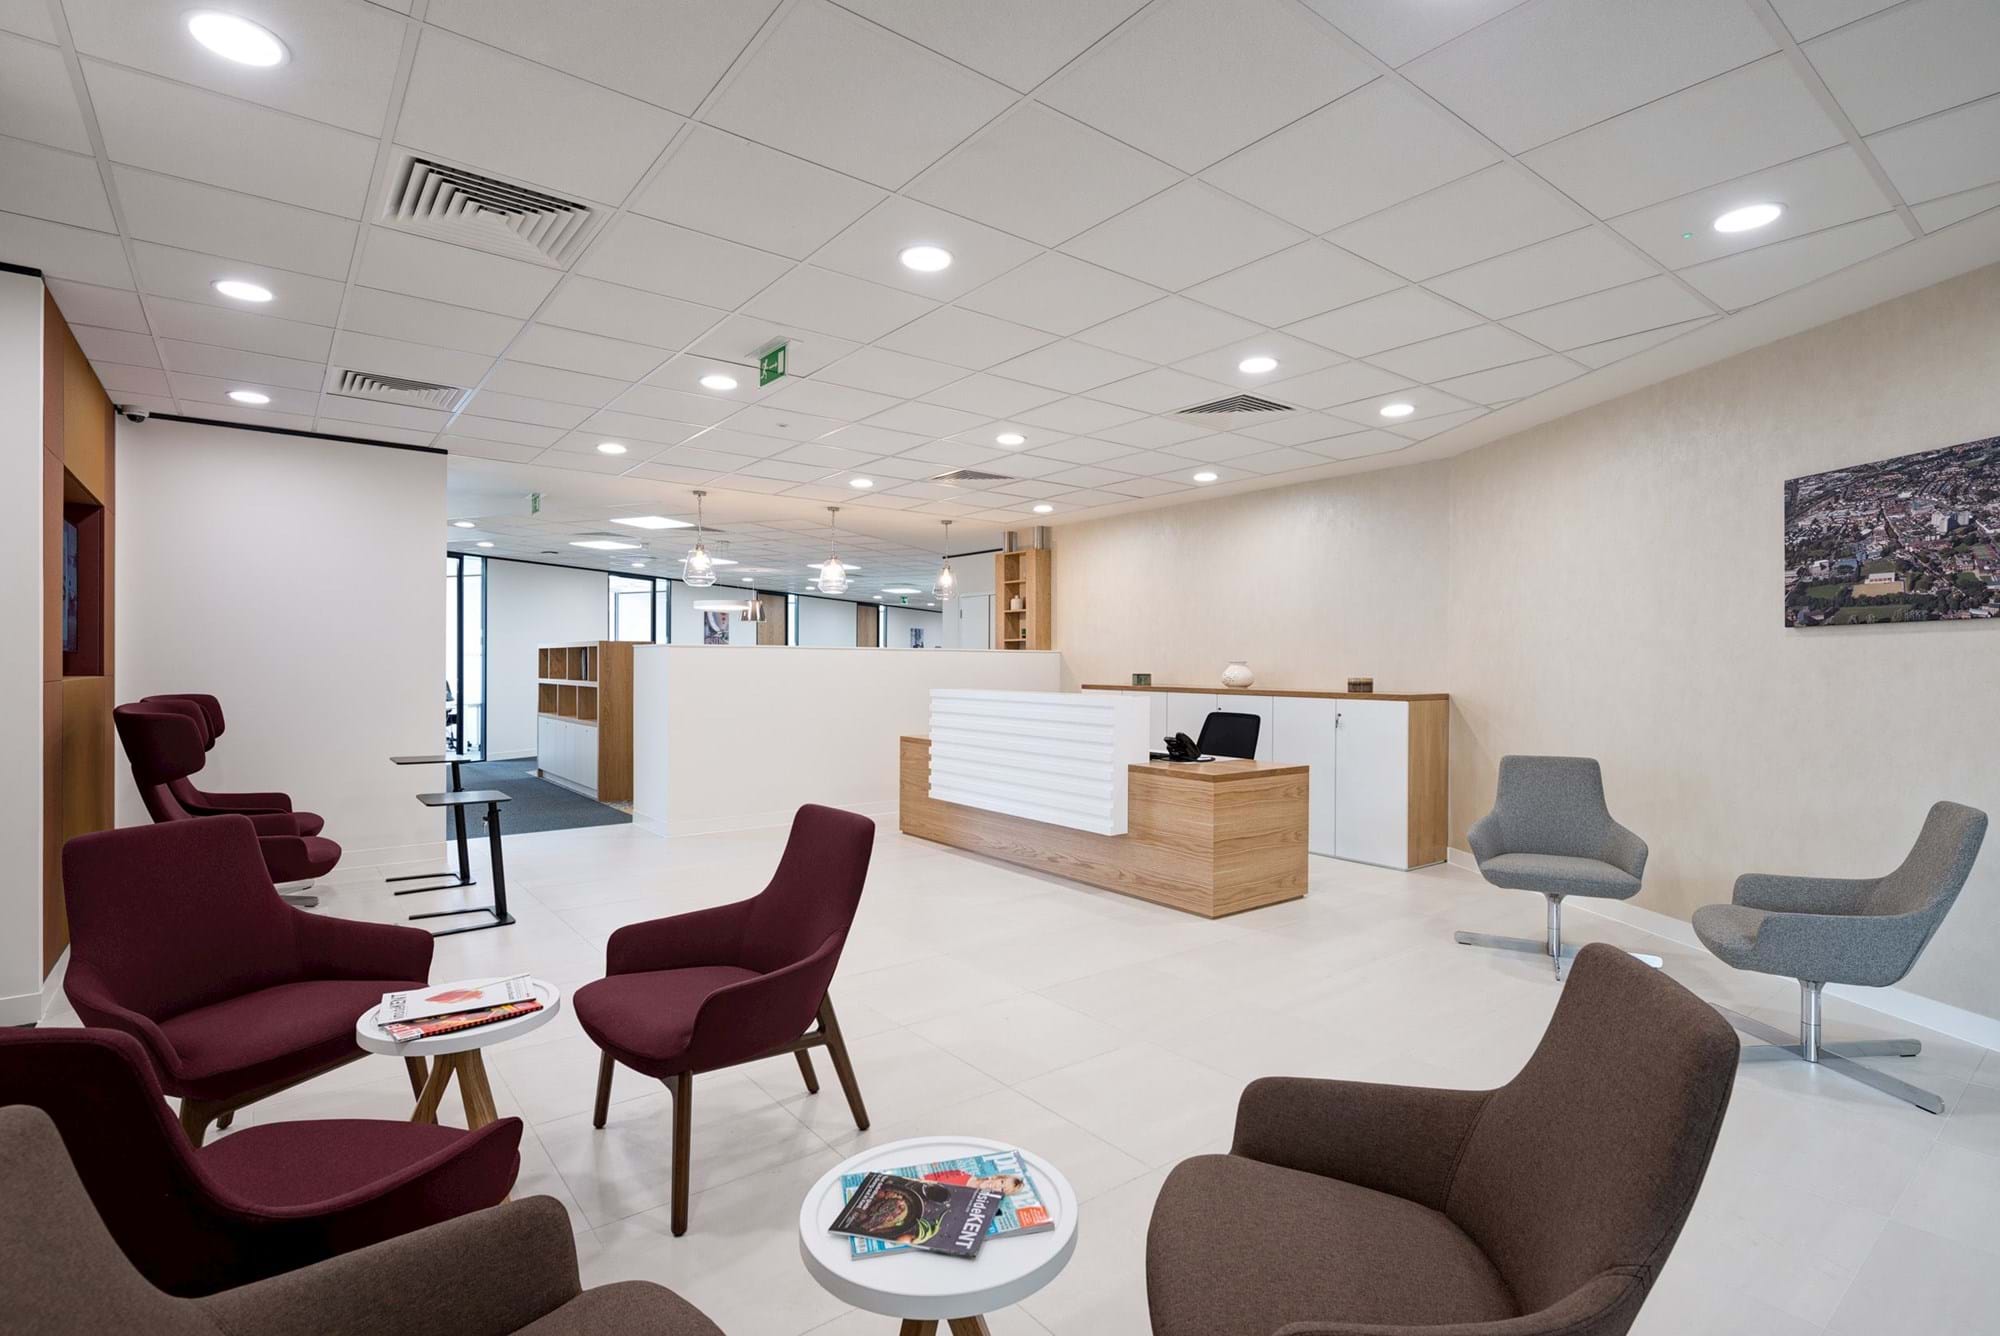 Modus Workspace office design, fit out and refurbishment - Regus Ashford - Regus Ashford 01 highres sRGB.jpg